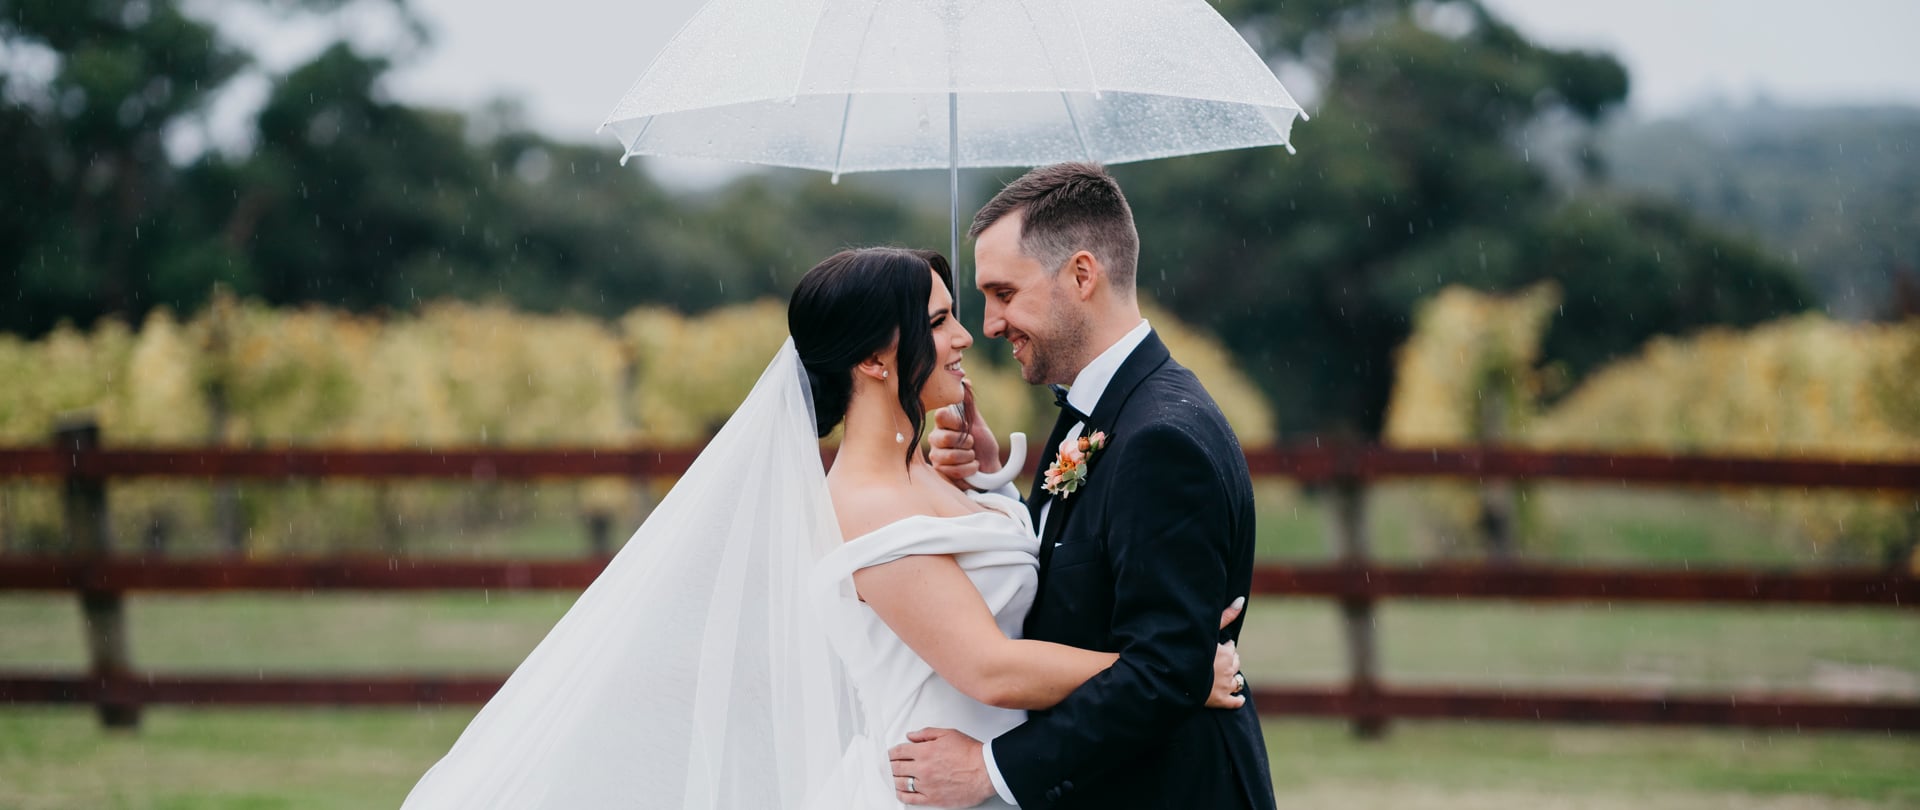 Natalie & Jeremy Wedding Video Filmed at Yarra Valley, Victoria